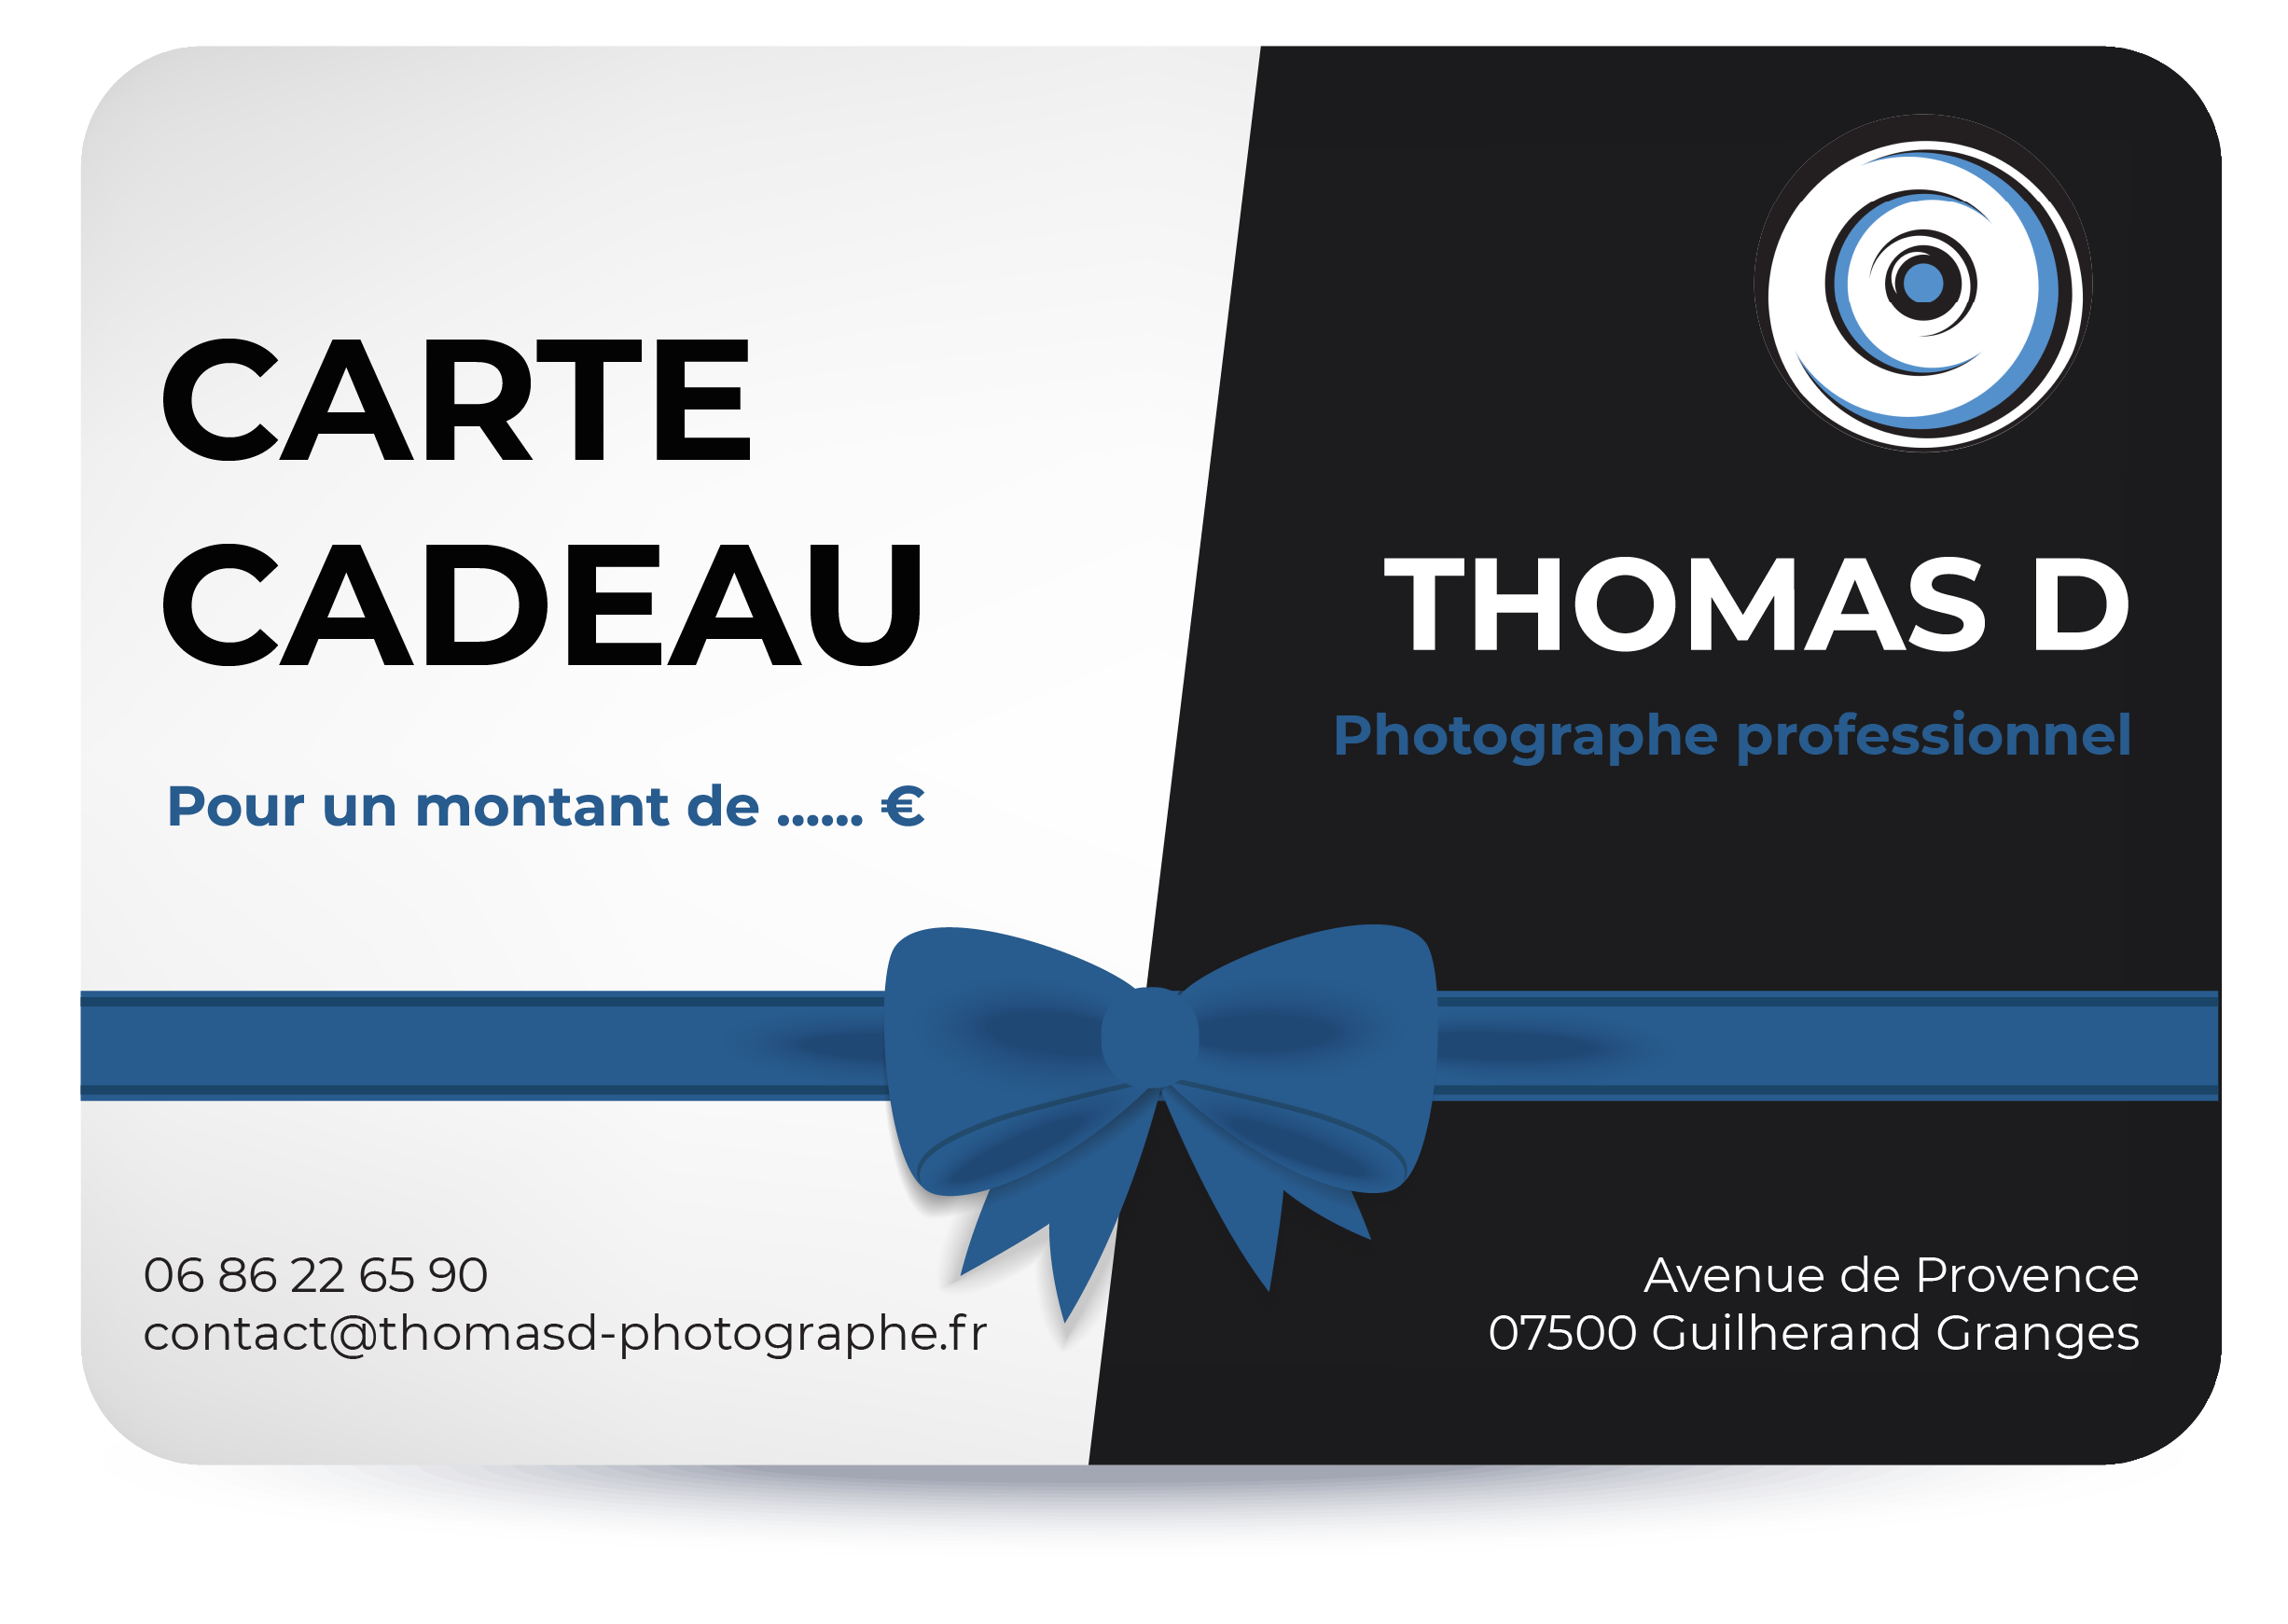 Thomas D Photographe - Carte cadeau